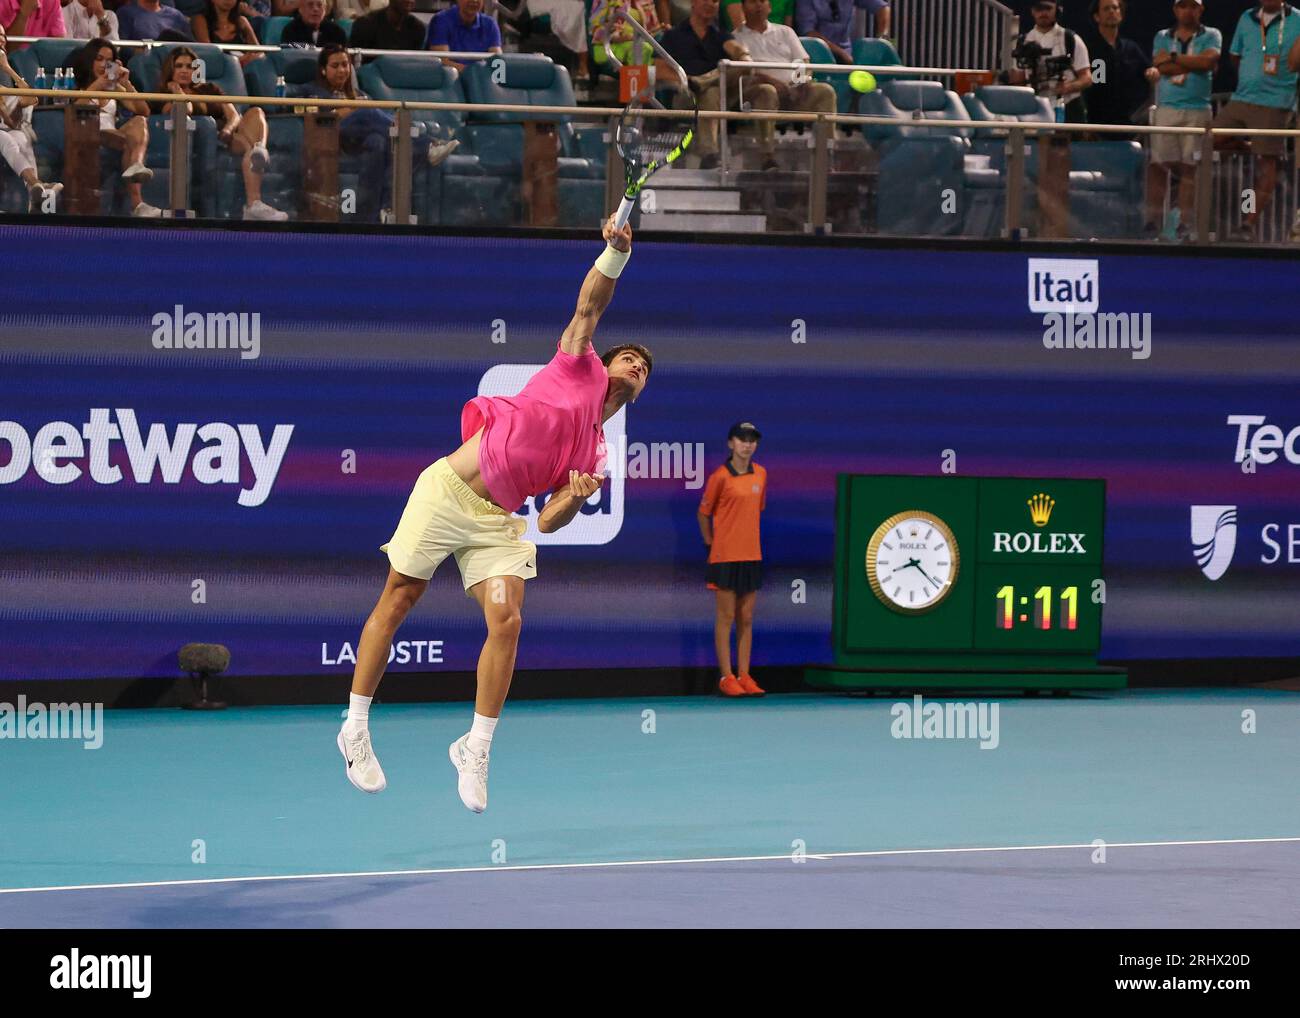 C. Alcaraz in action. Florida, USA, Miami Open Tennis, March 2023, Hard Rock Stadium, Photo: Chris Arjoon/Credit Stock Photo